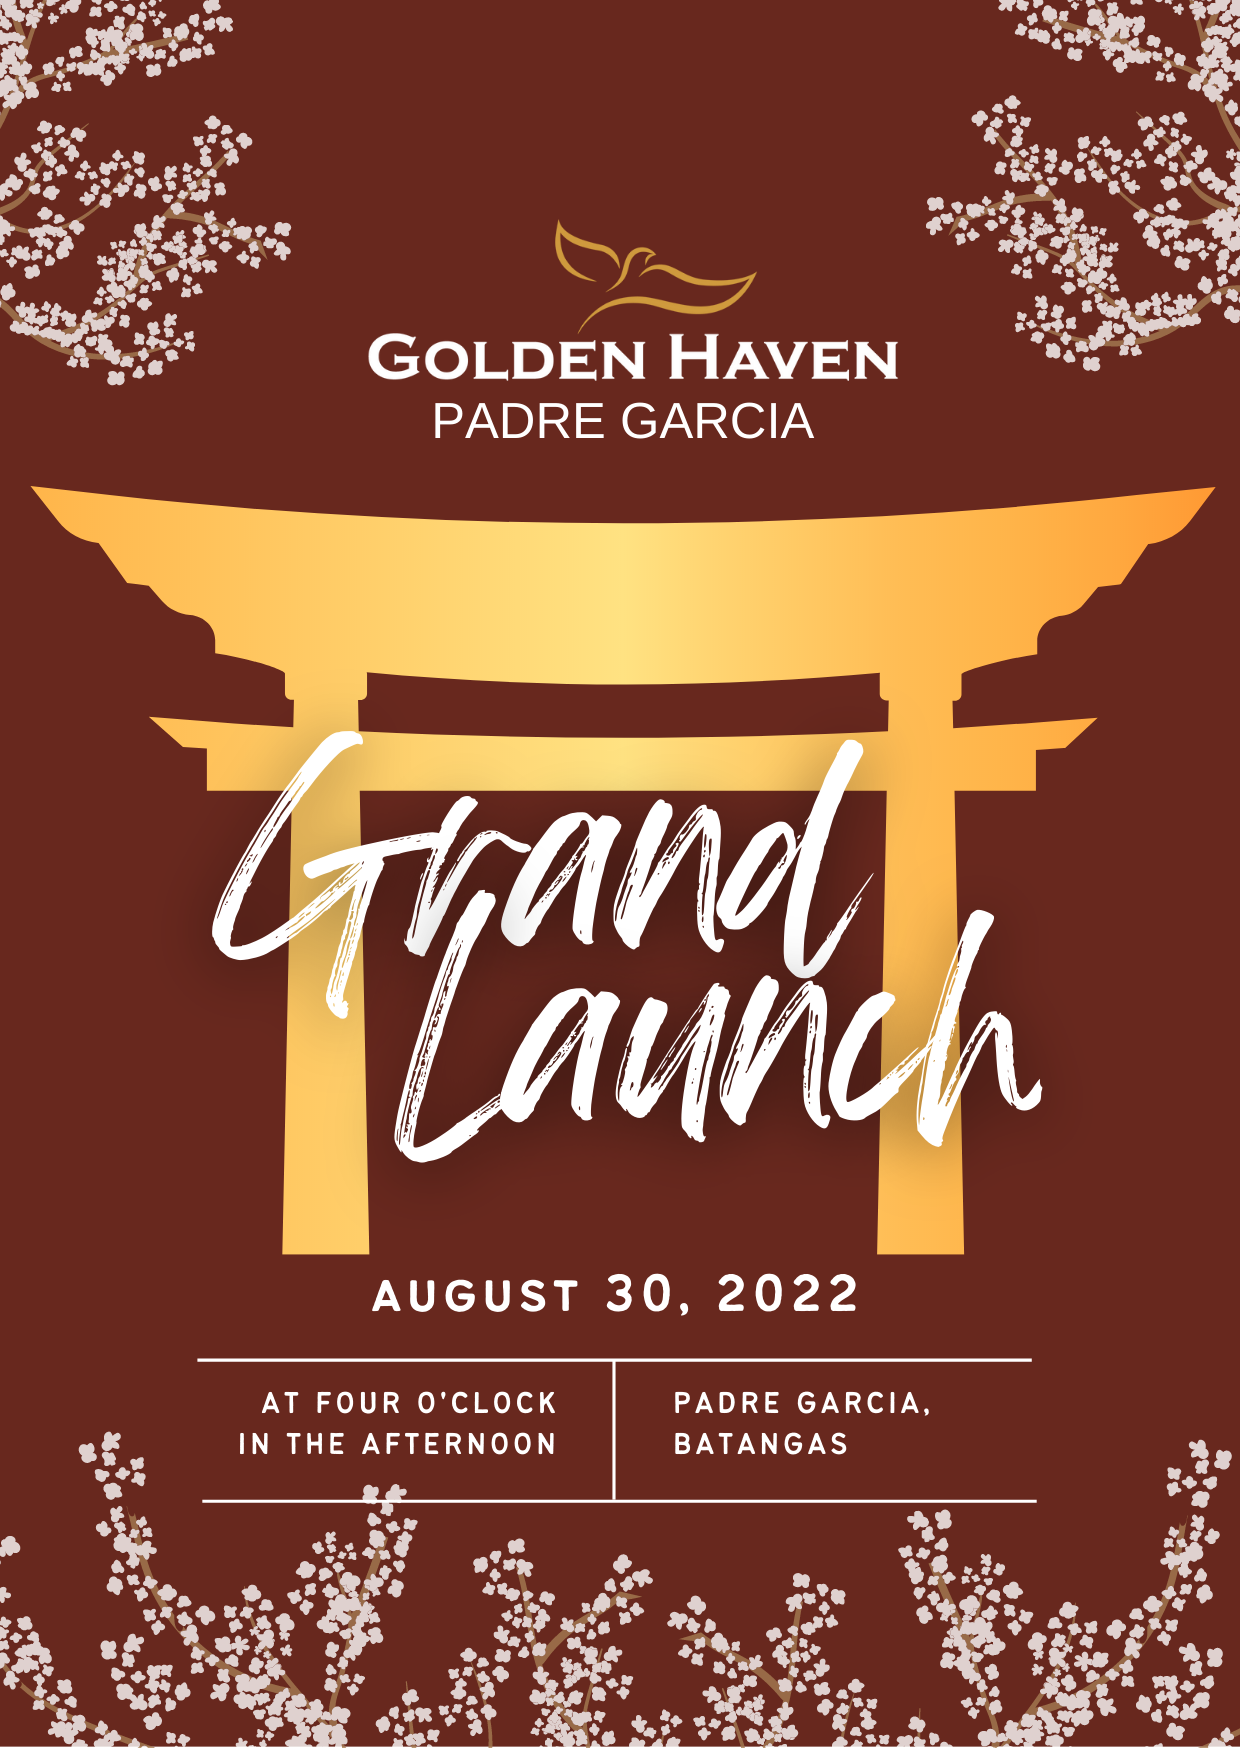 Golden Haven Padre Garcia Grand Launch